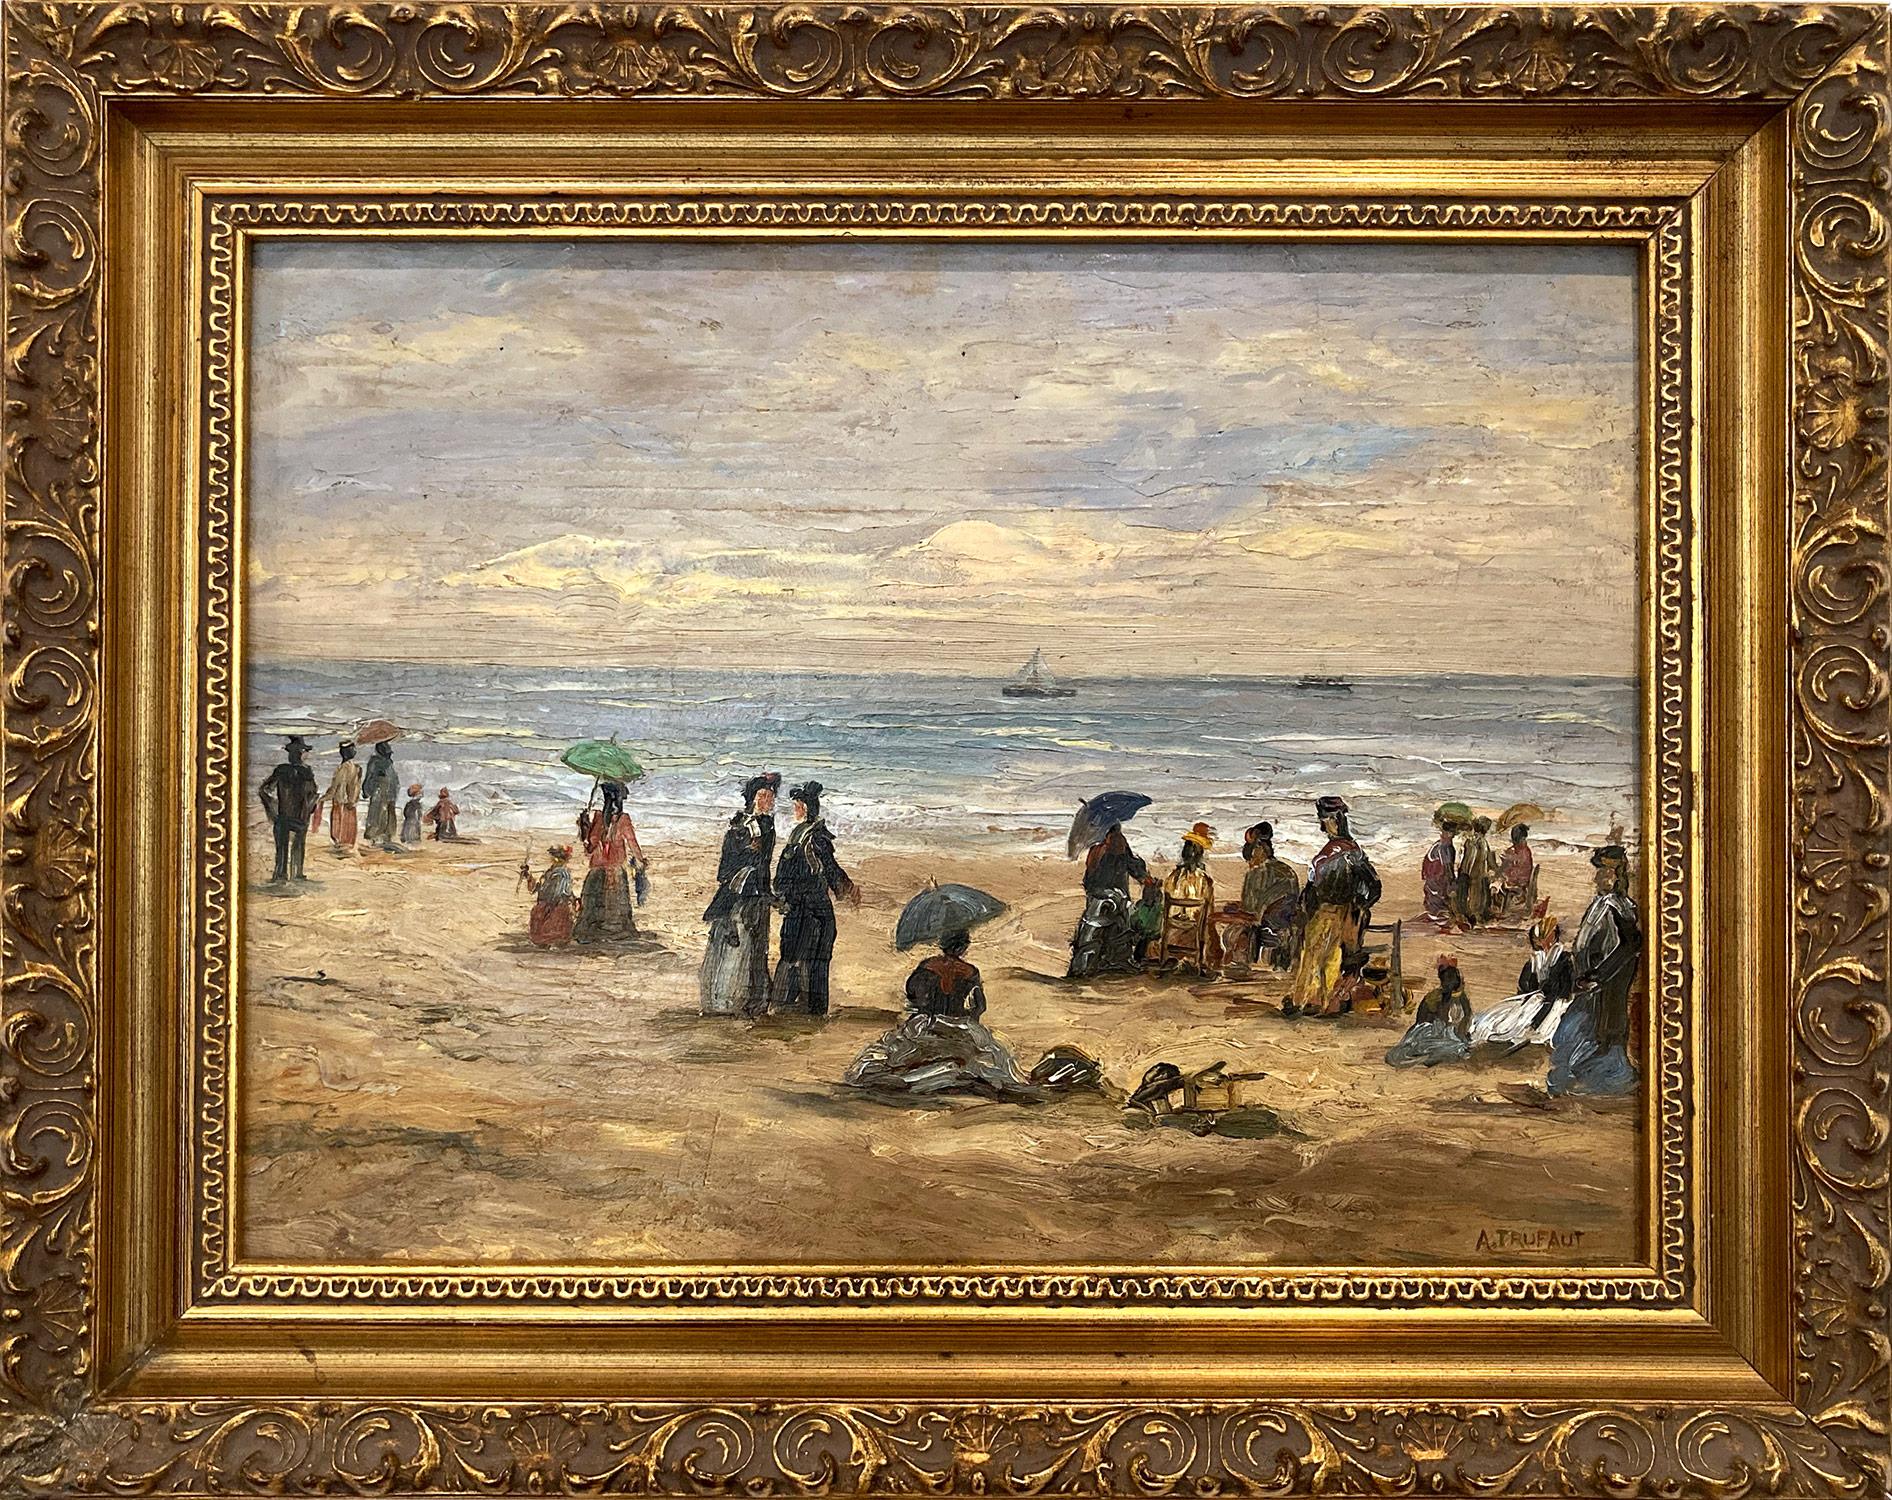 A. Trufaut  Figurative Painting - "La Cote Normandi" Beach Scene Early 20th Century Impressionistic Oil Painting 